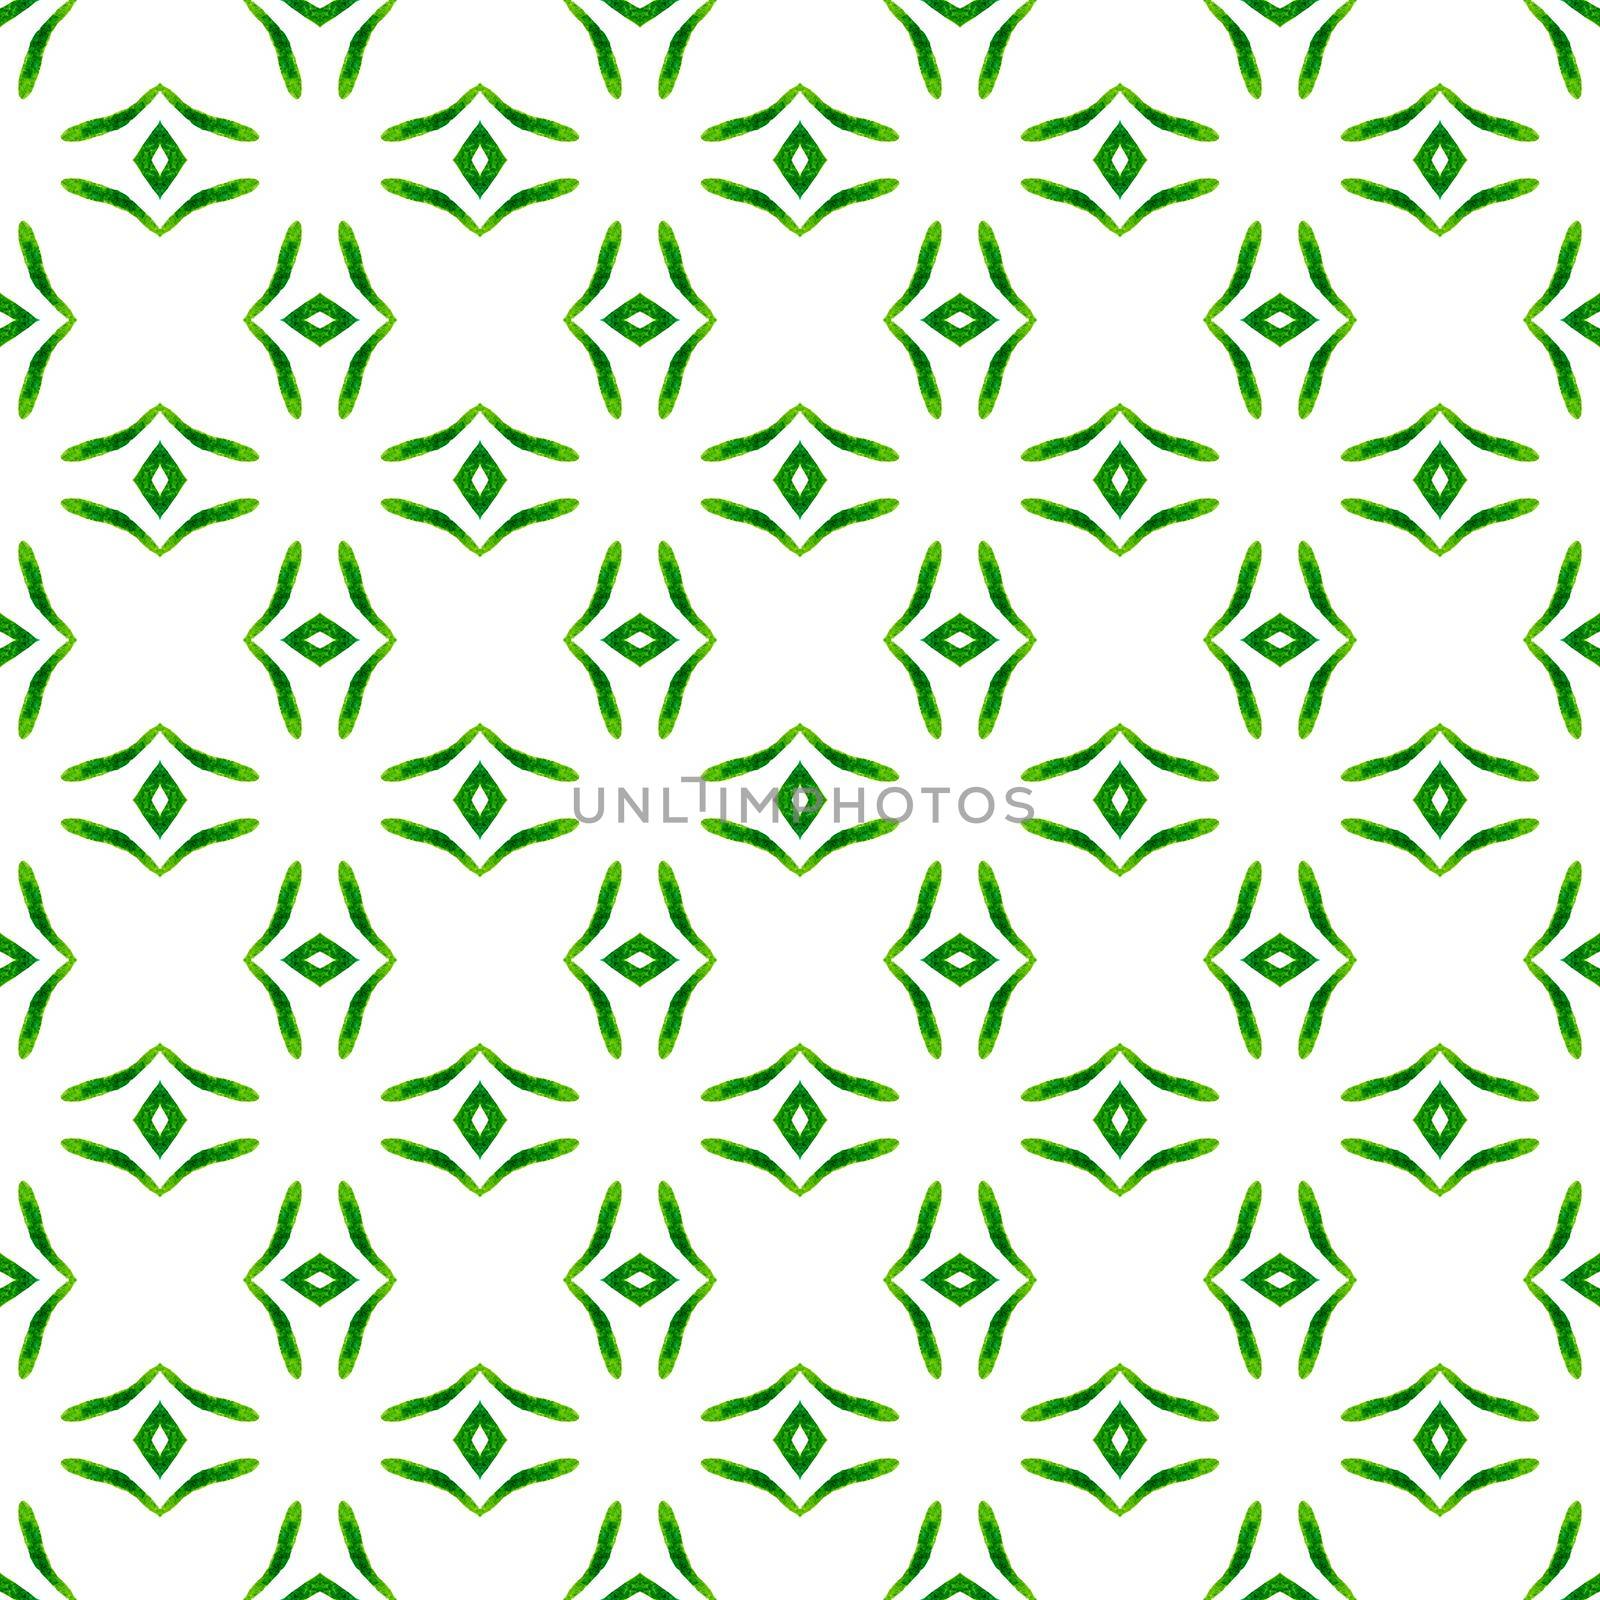 Striped hand drawn design. Green captivating boho chic summer design. Textile ready elegant print, swimwear fabric, wallpaper, wrapping. Repeating striped hand drawn border.